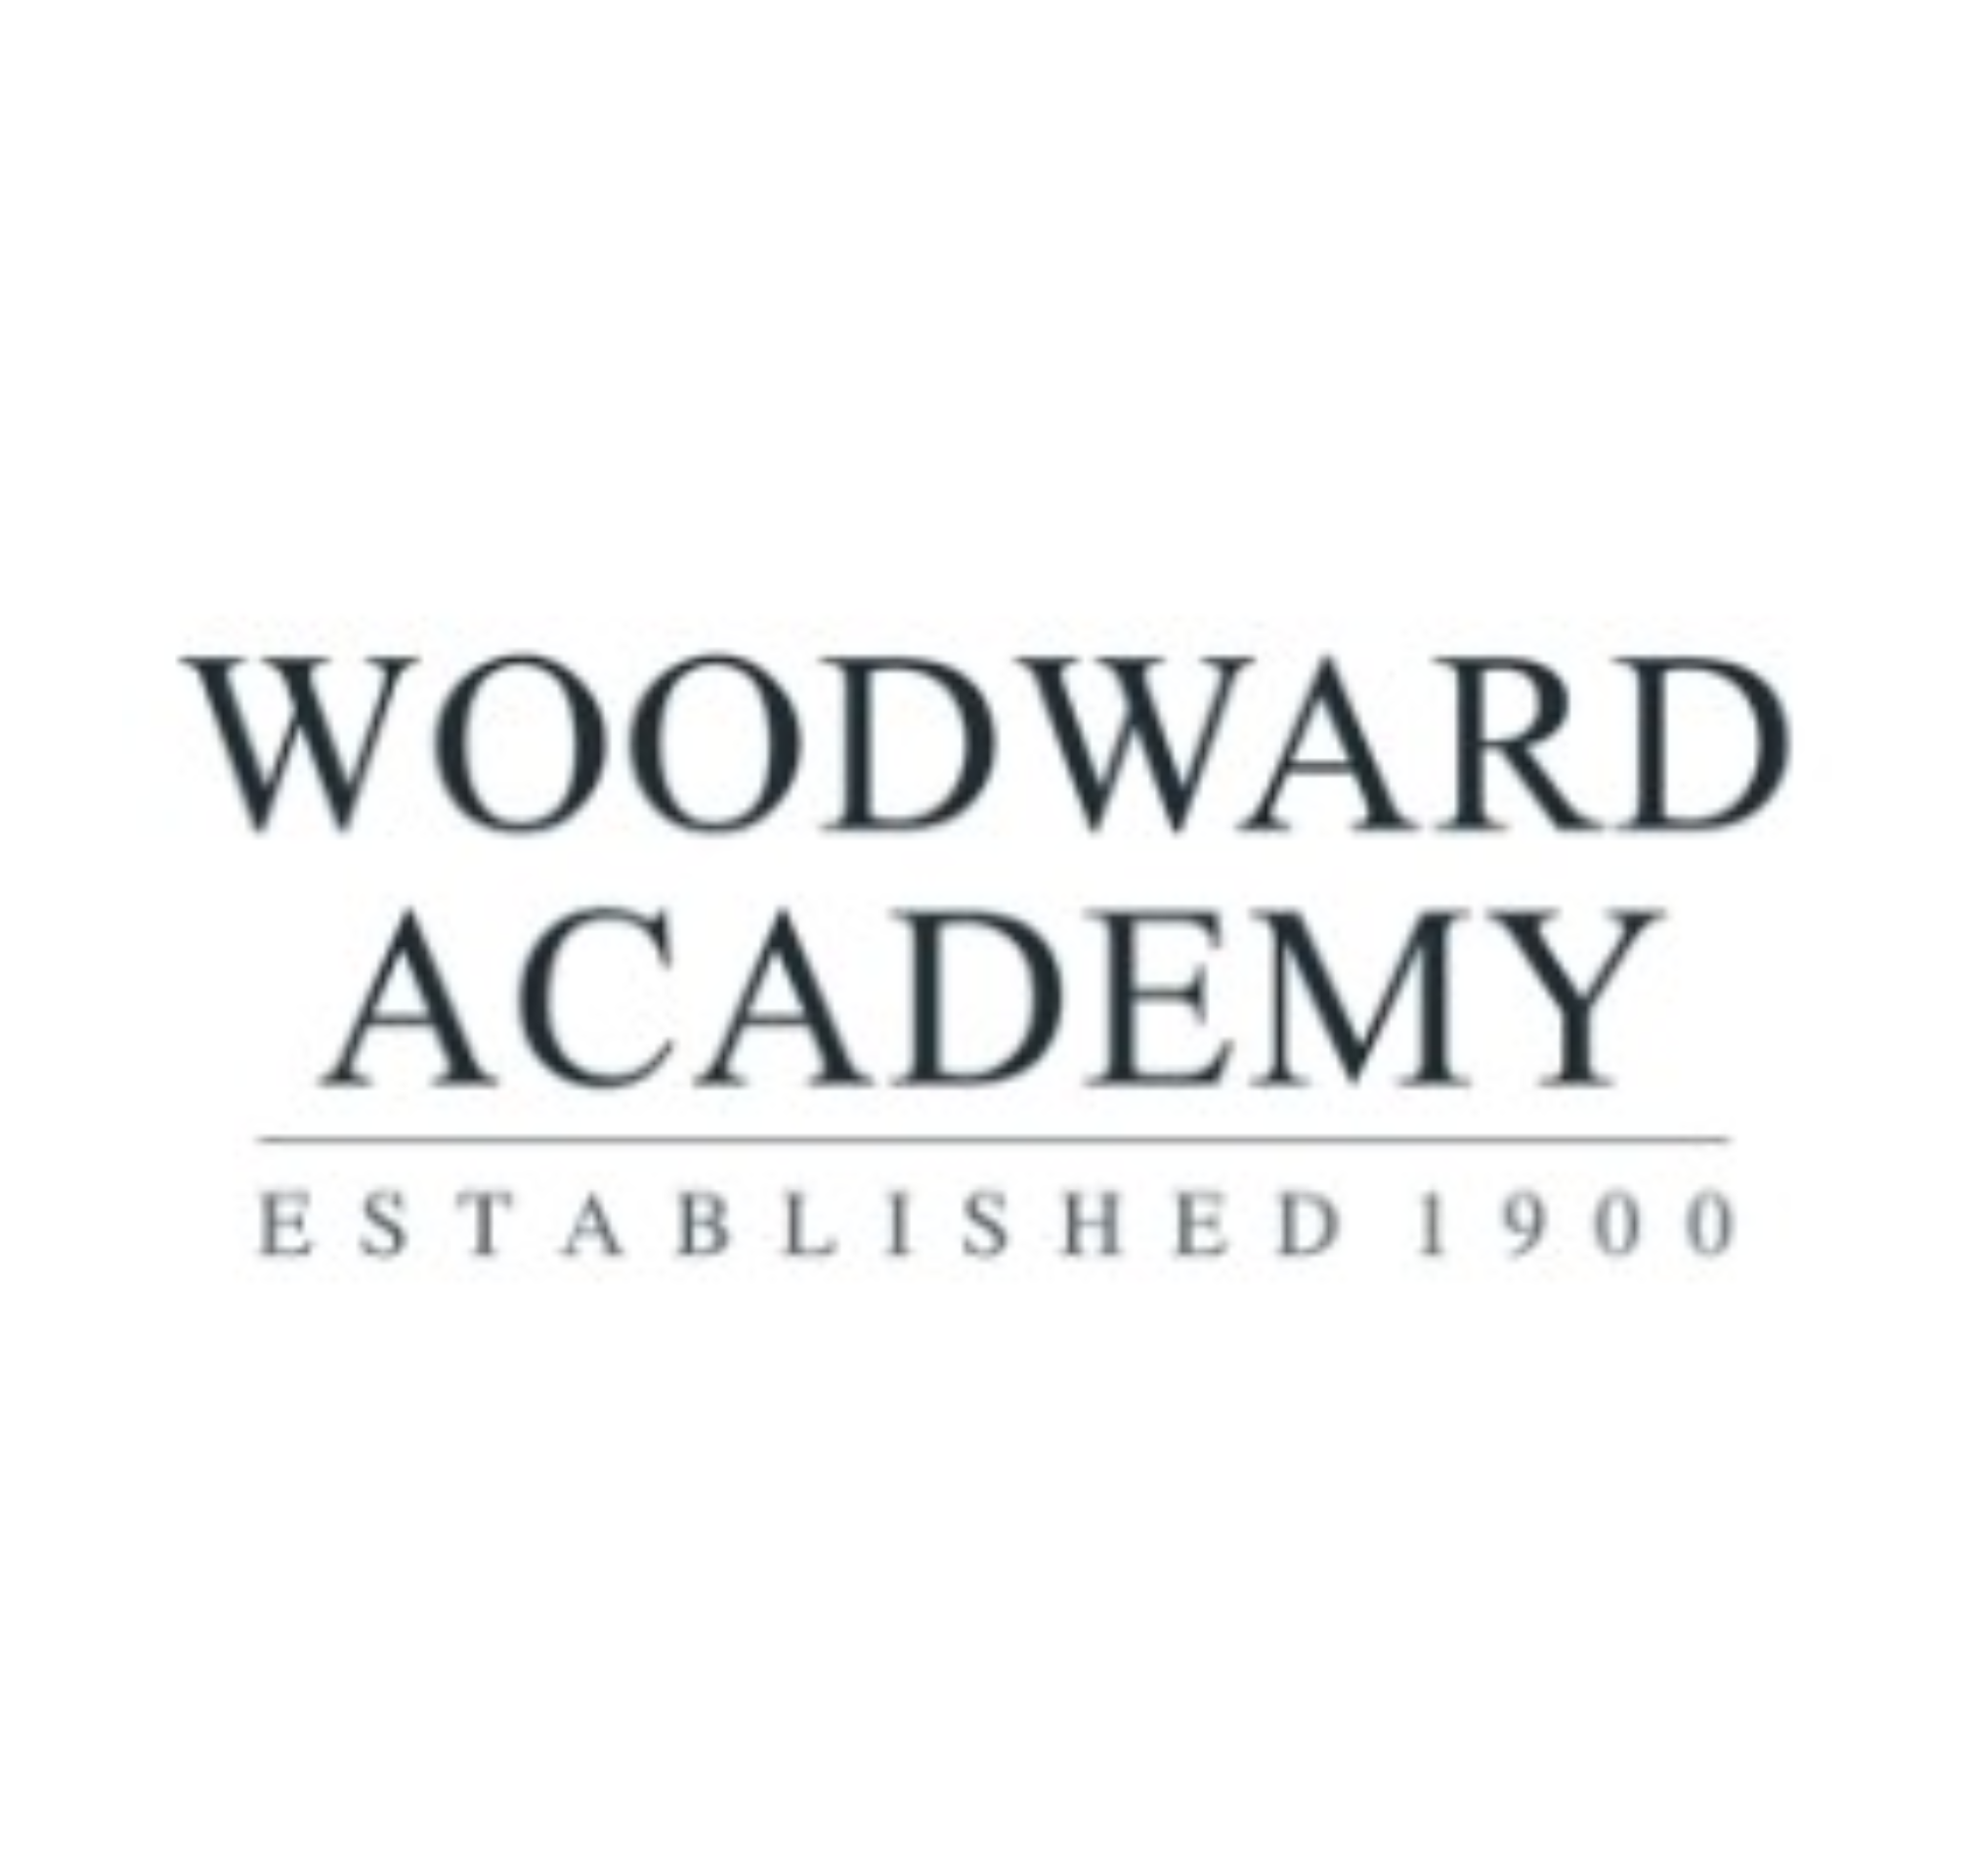 Woodward Academy Logo